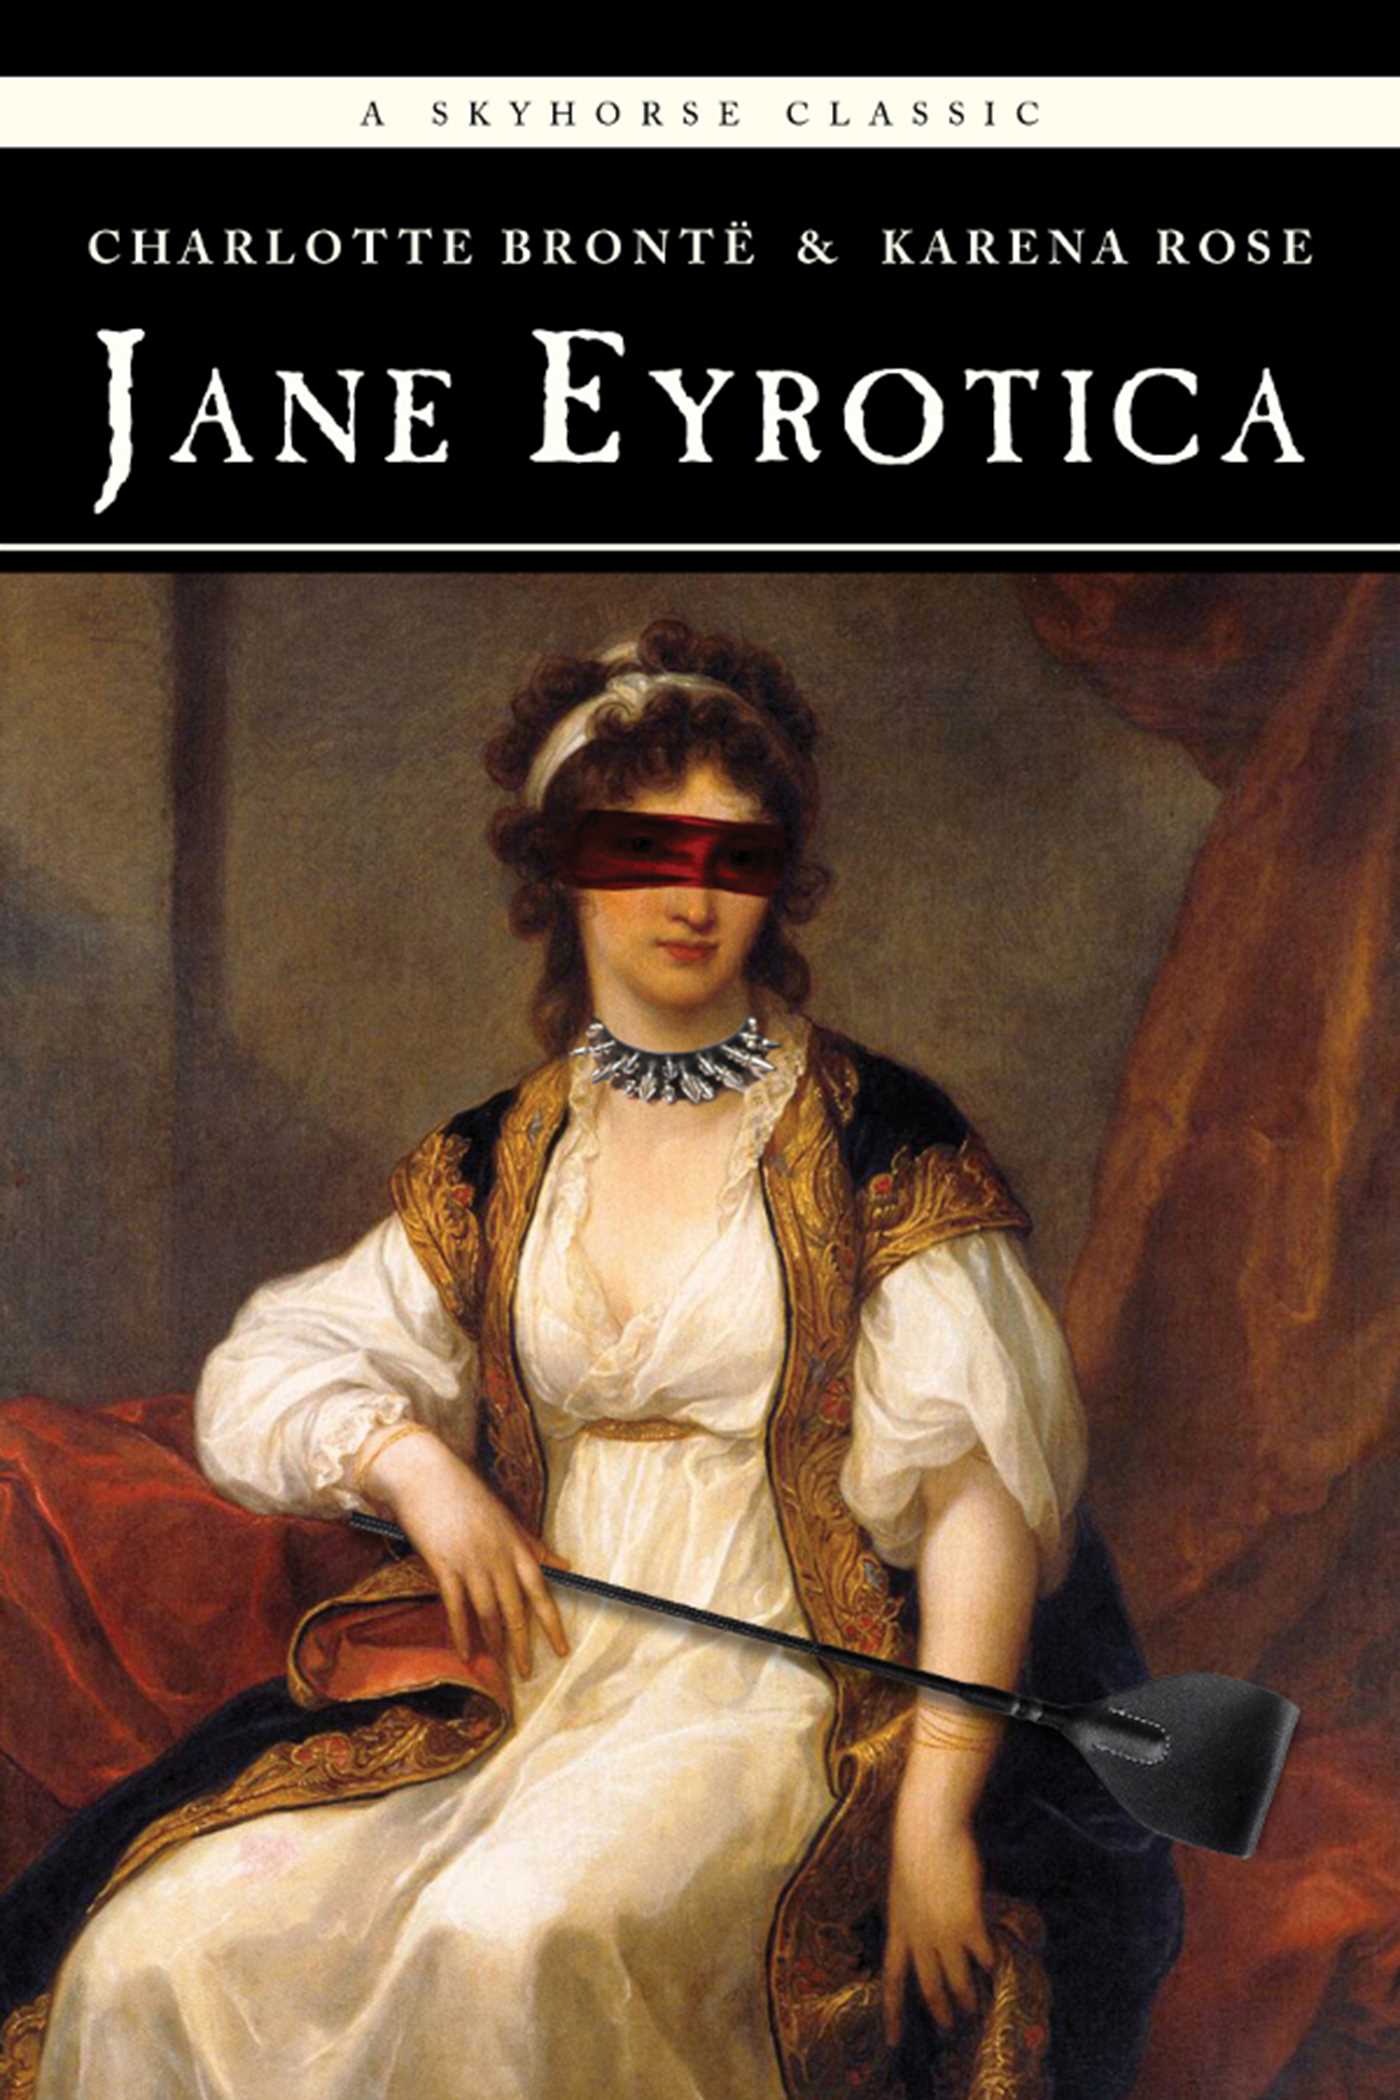 Jane Eyrotica